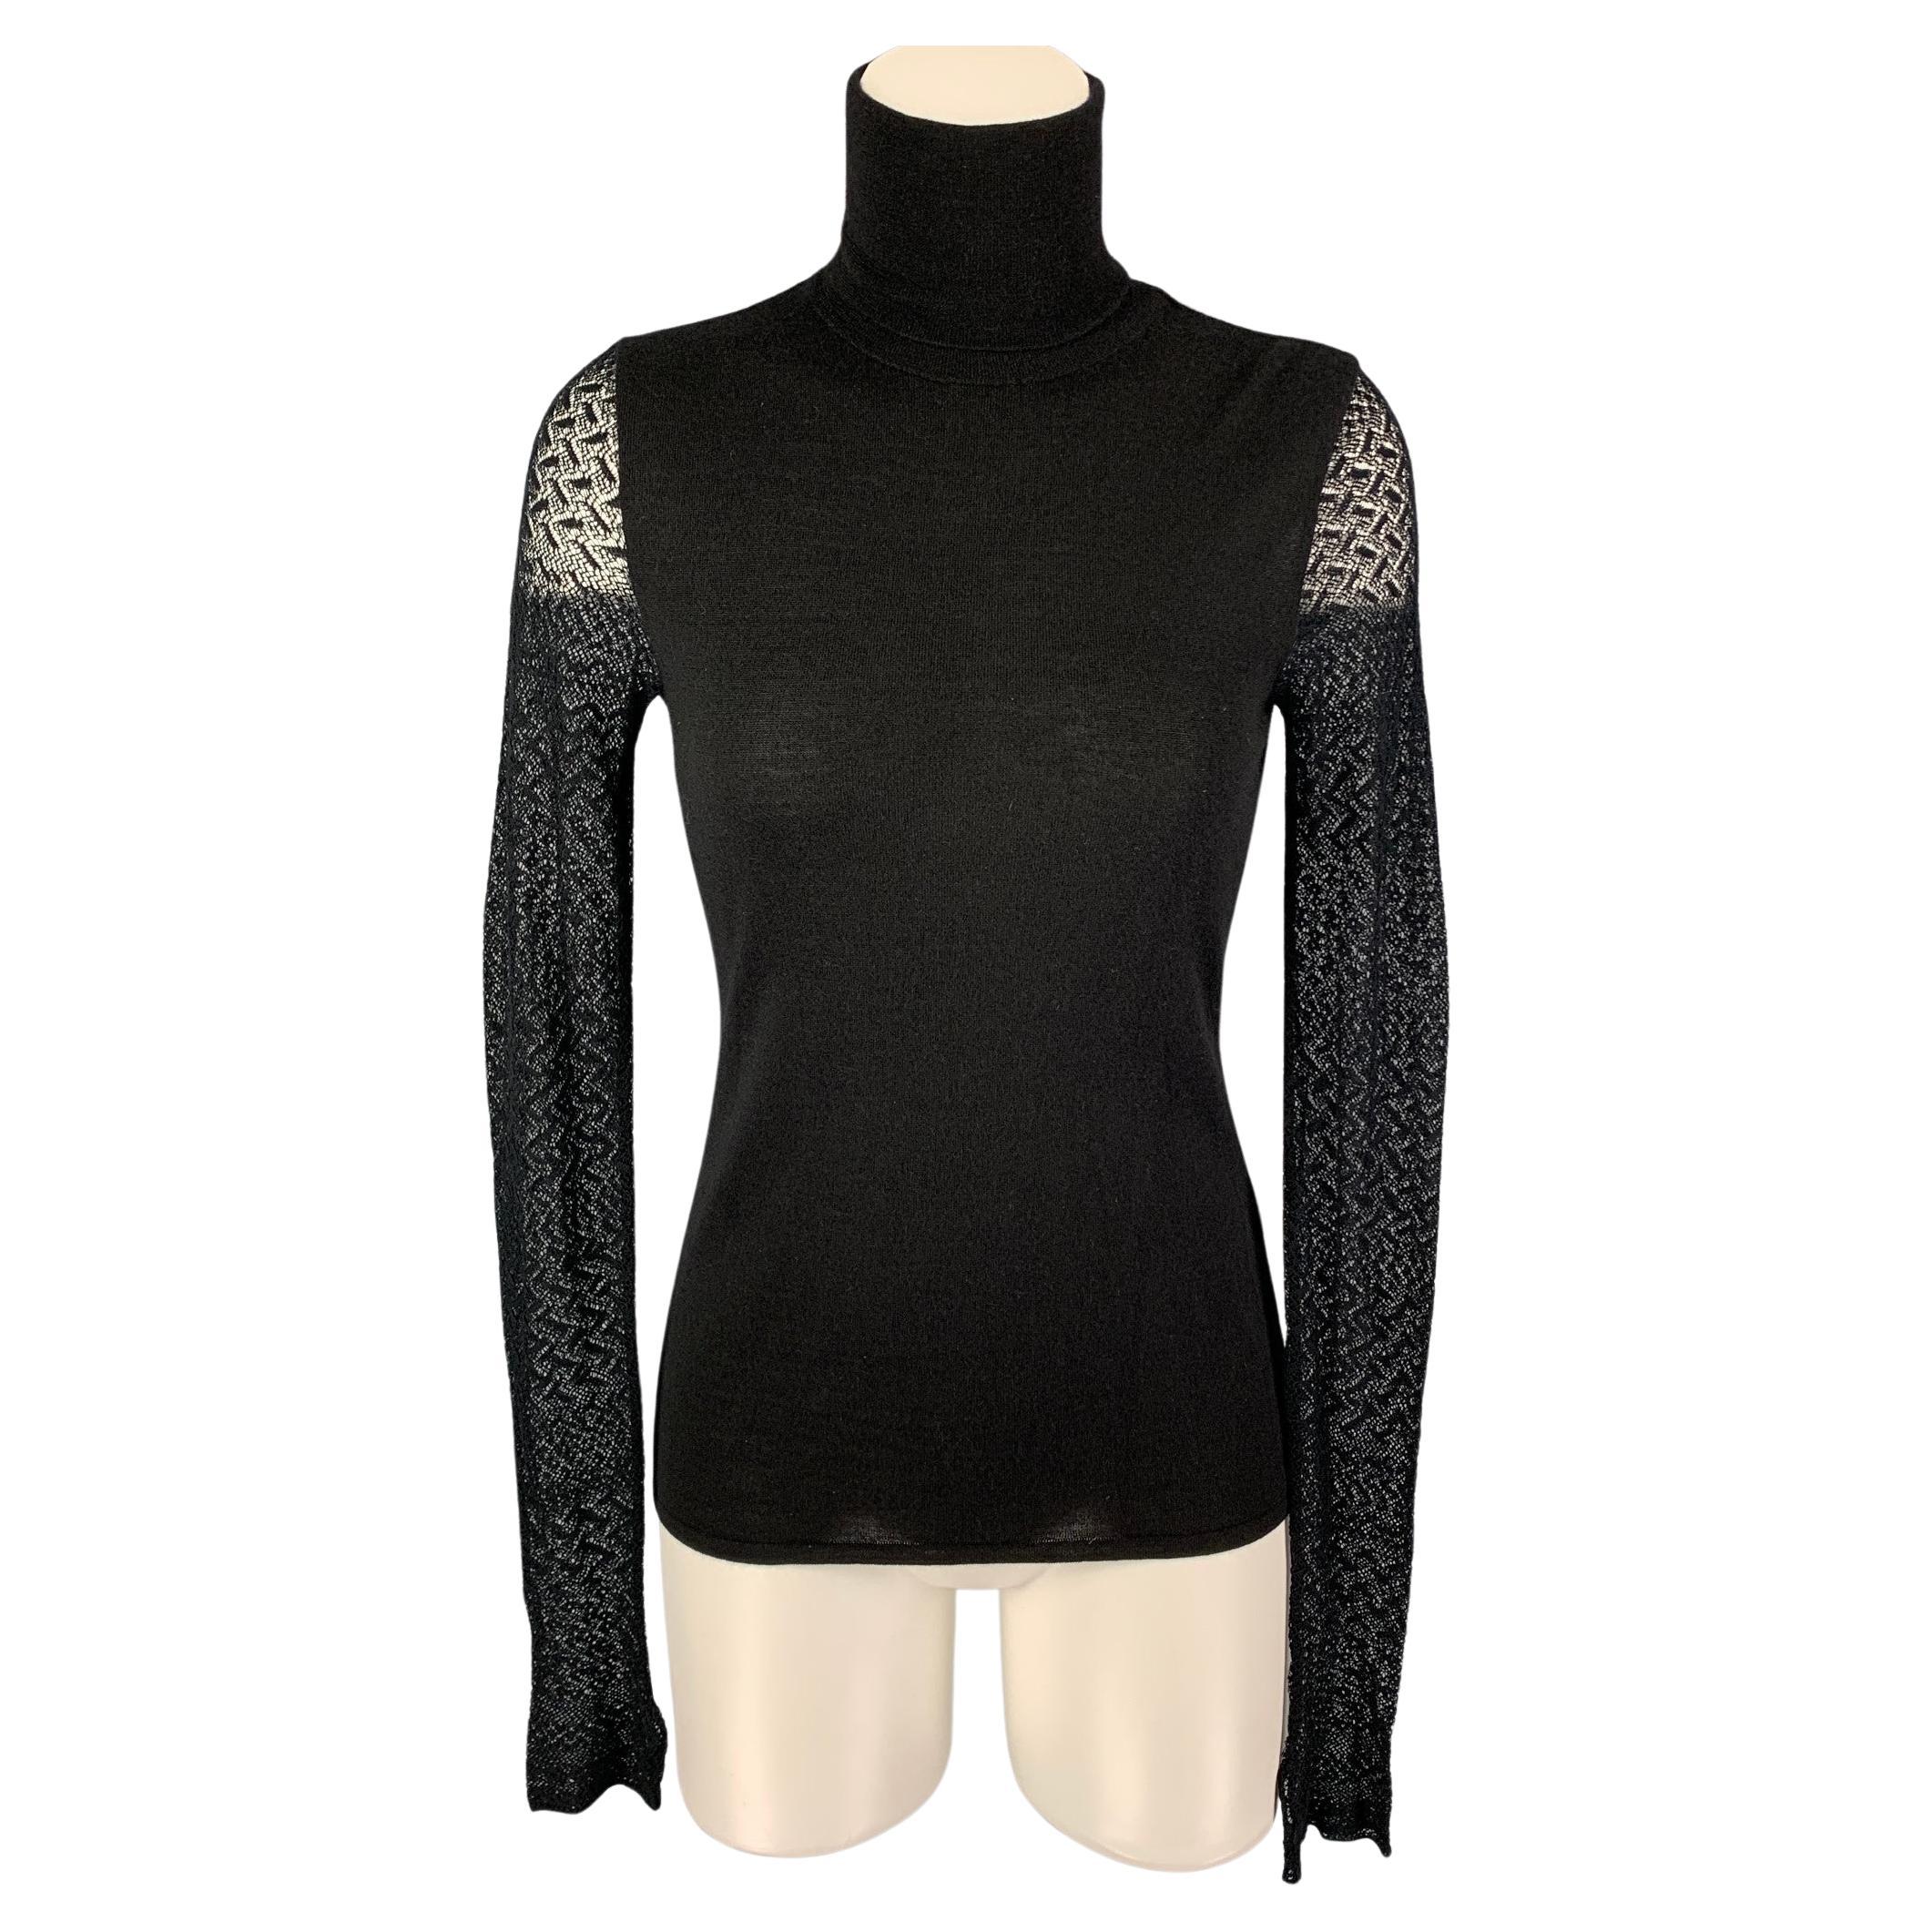 RALPH LAUREN Collection Size M Black Cashmere Silk Turtleneck Pullover